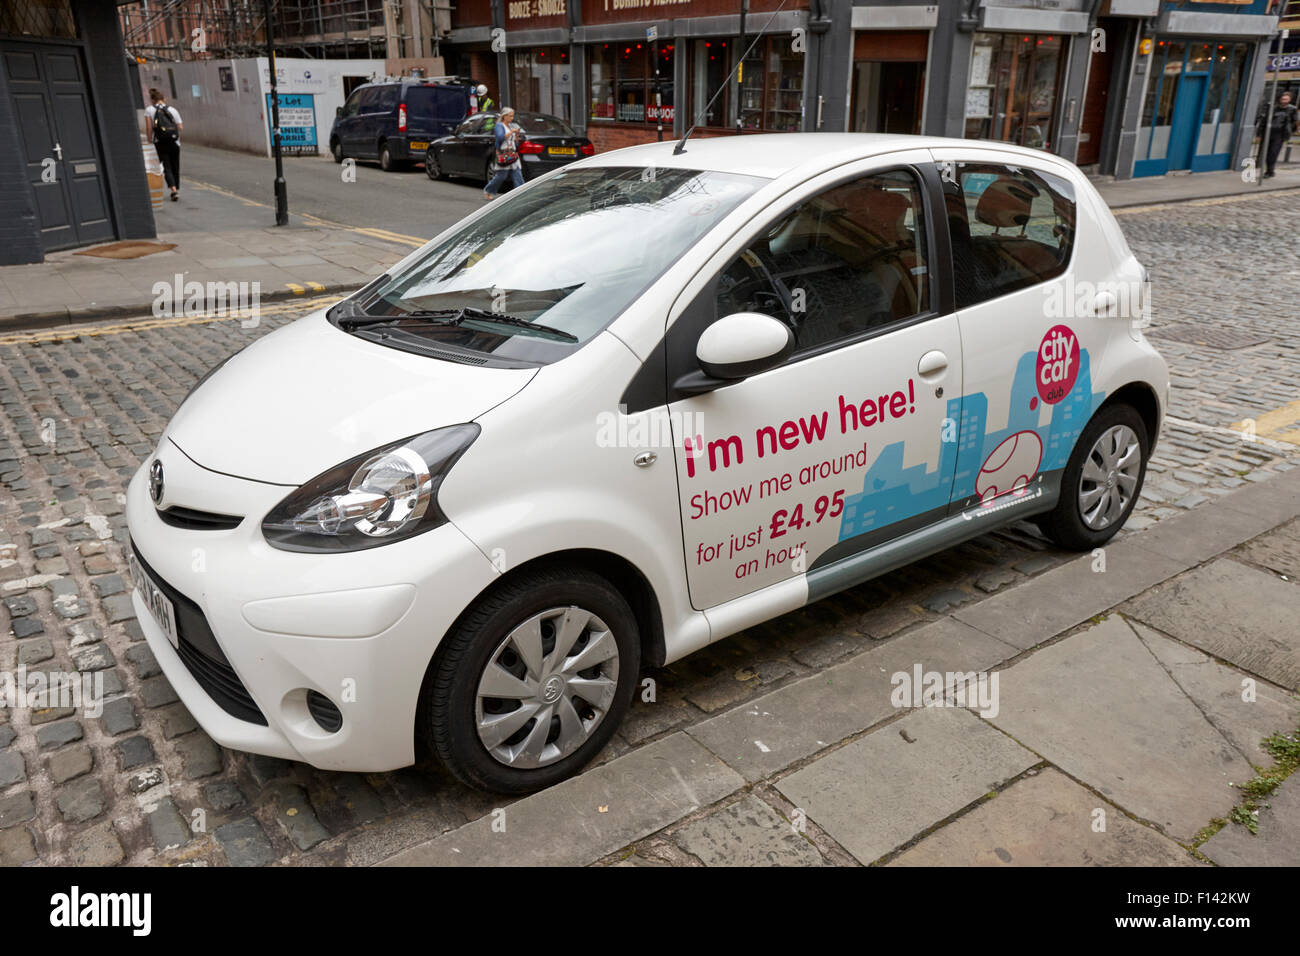 City car club toyota car sharing scheme in Northern Quarter Manchester Regno Unito Foto Stock